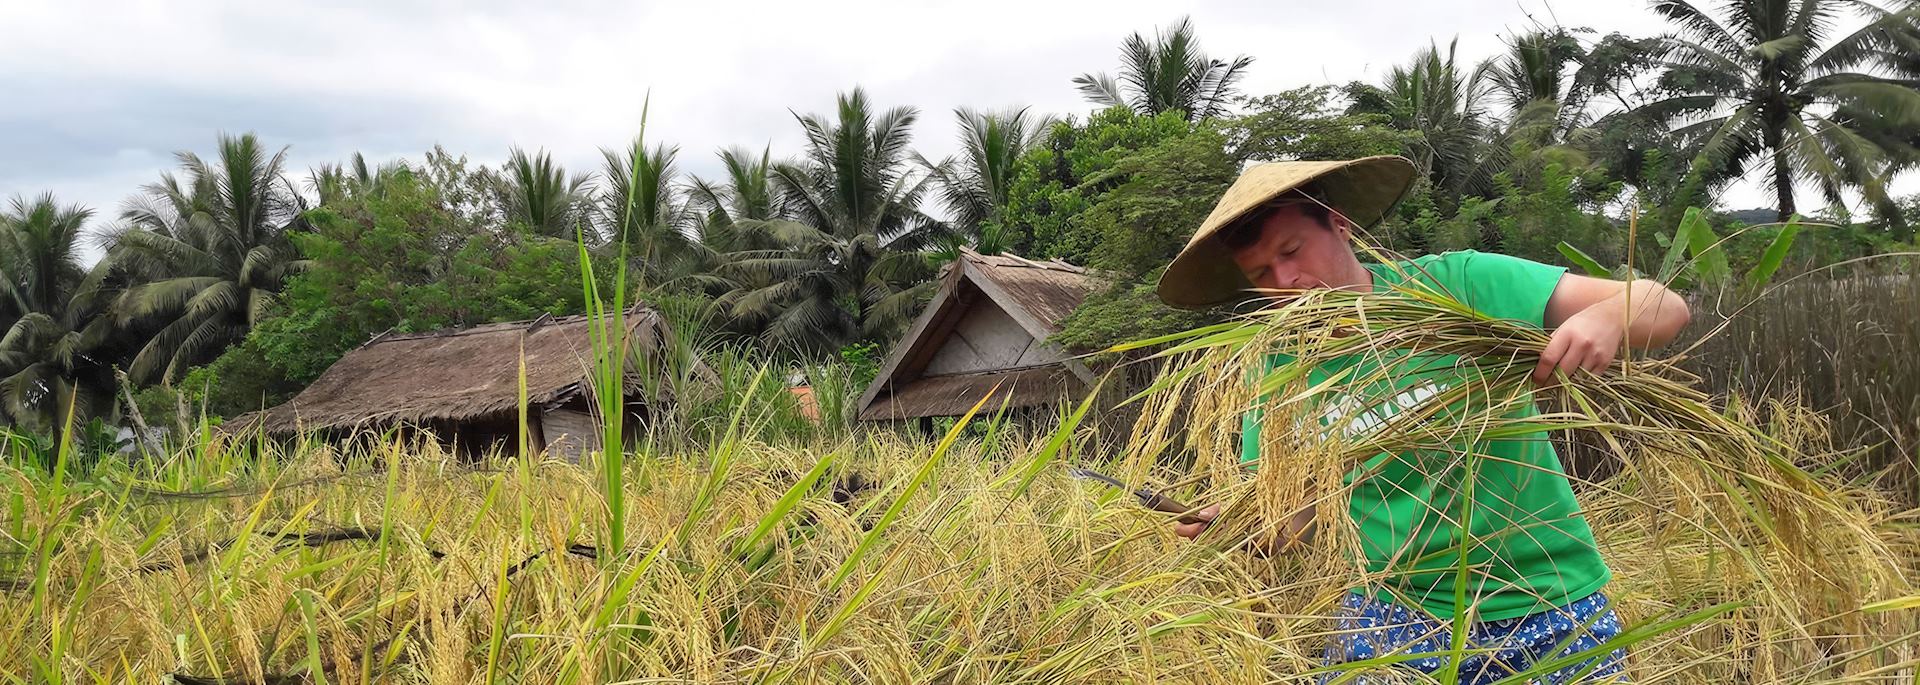 Ross harvesting rice, Vietnam